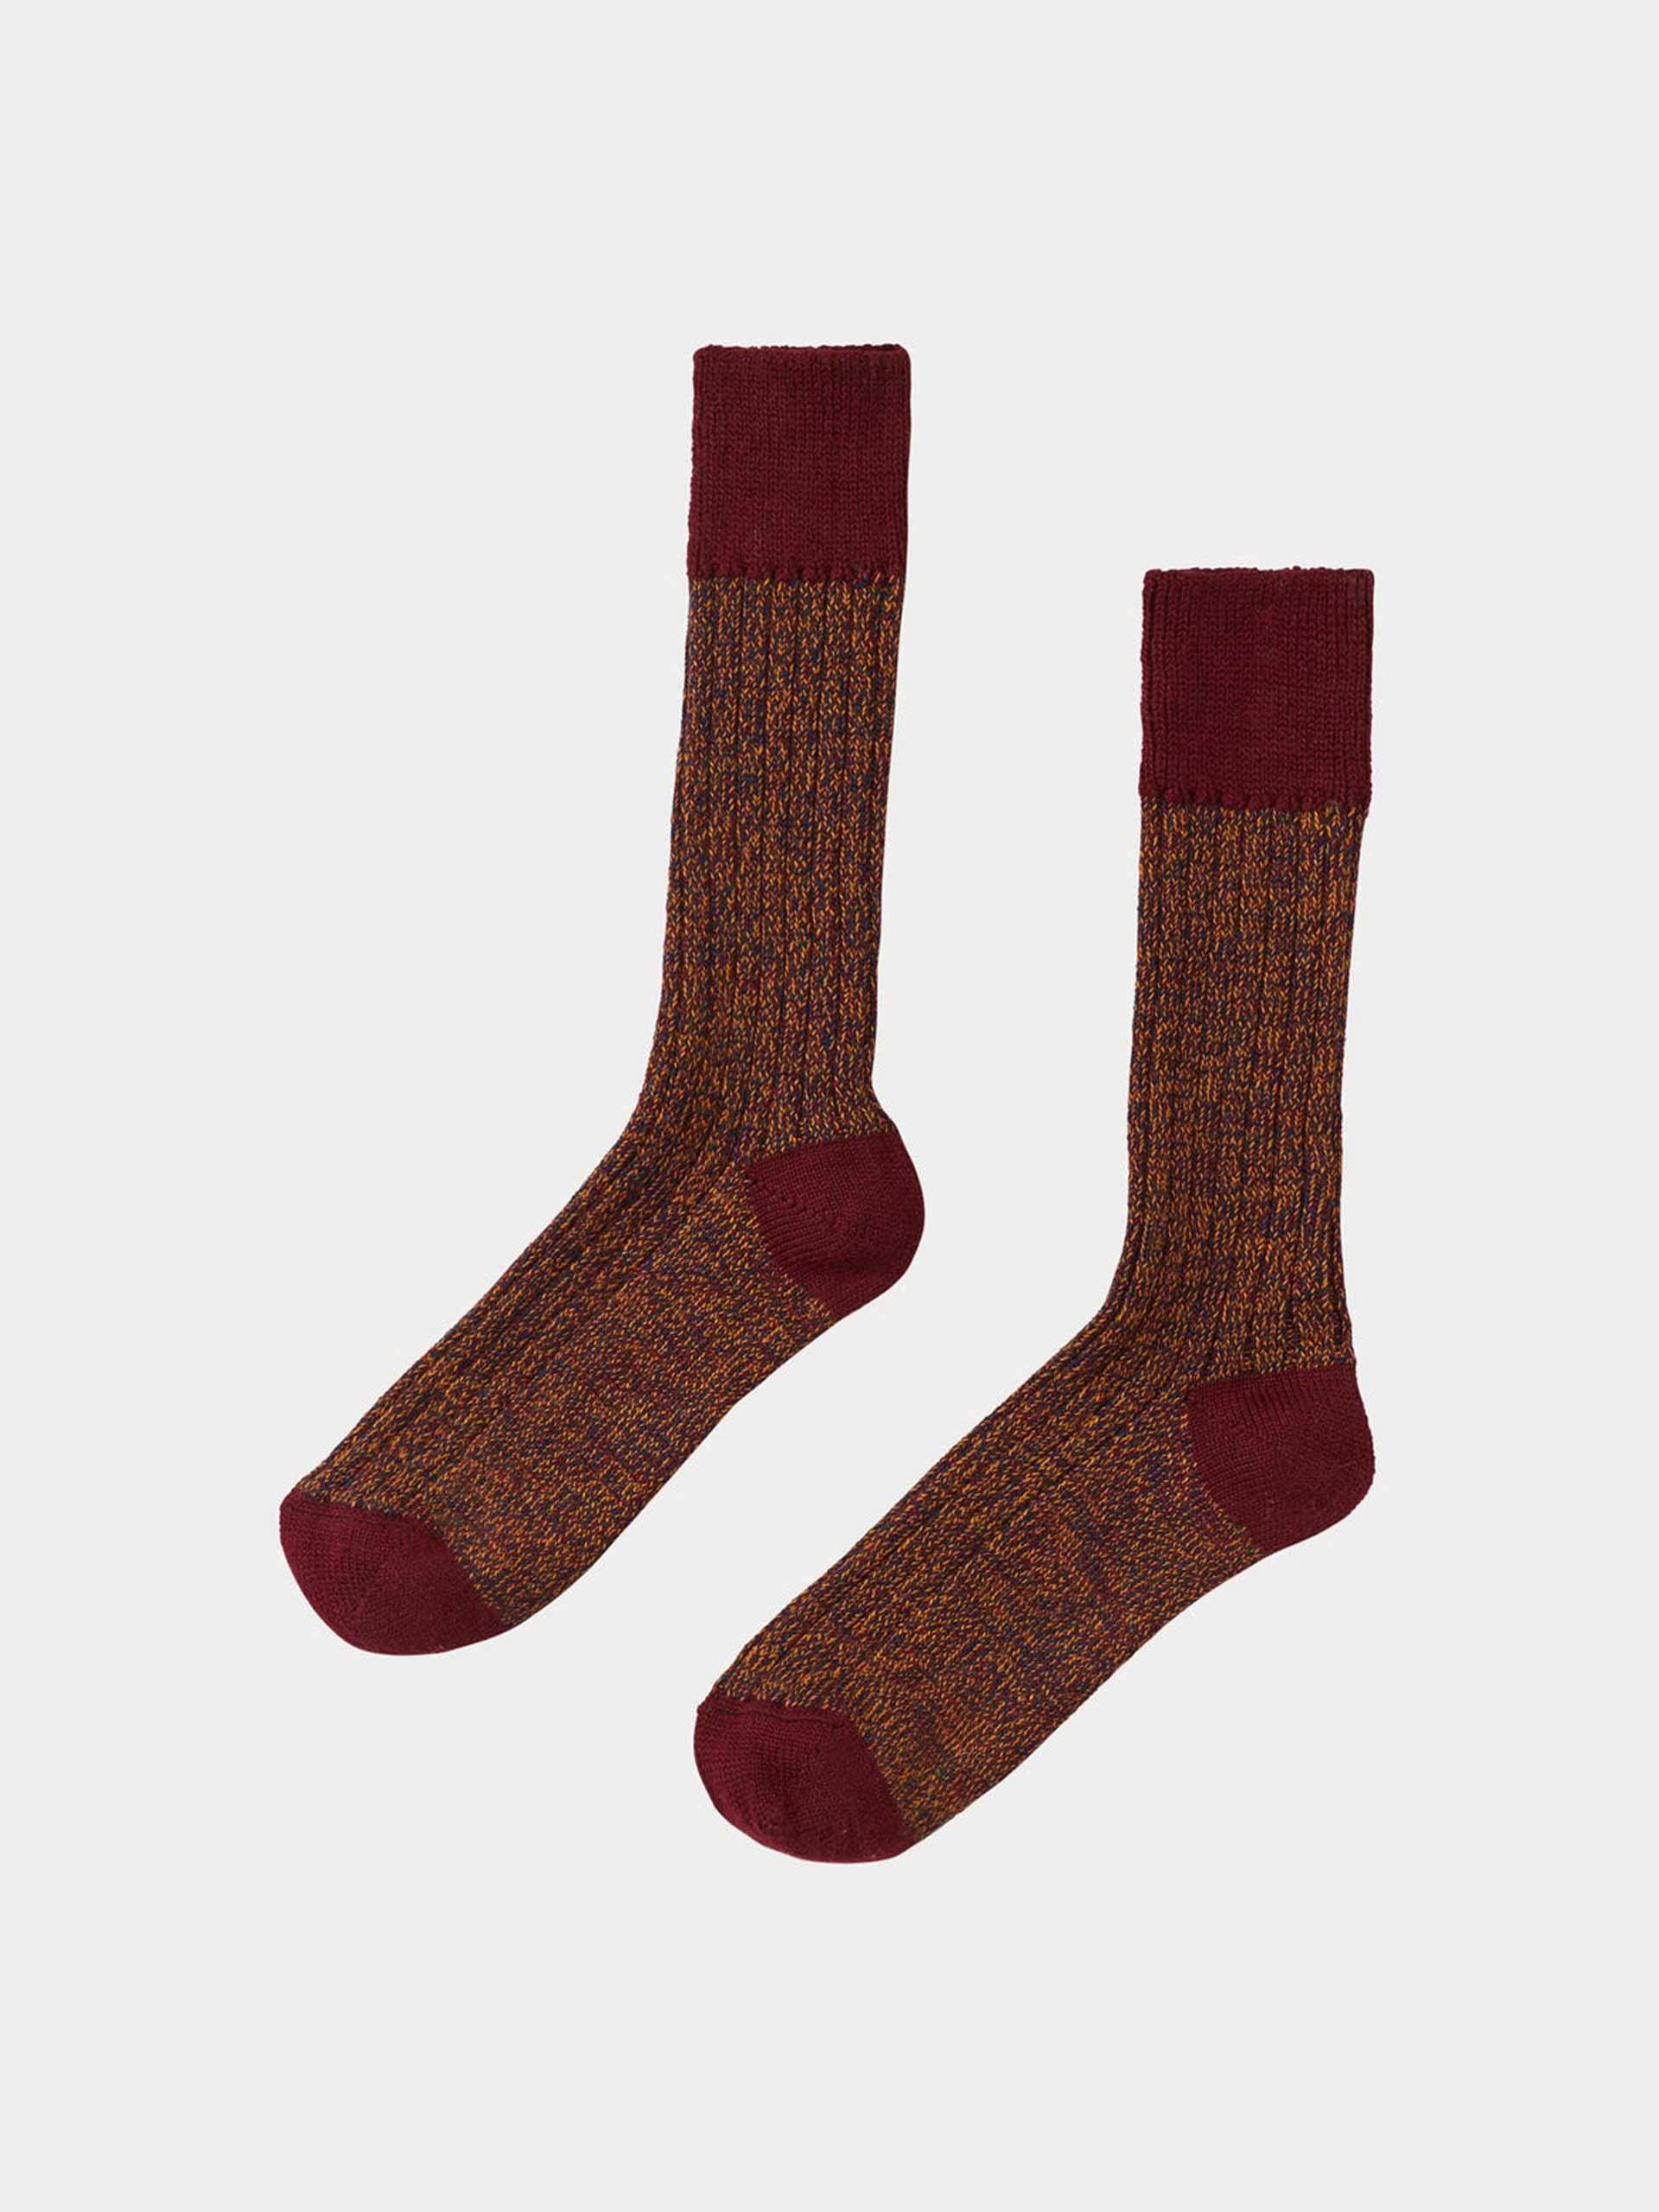 Firth socks - burgundy